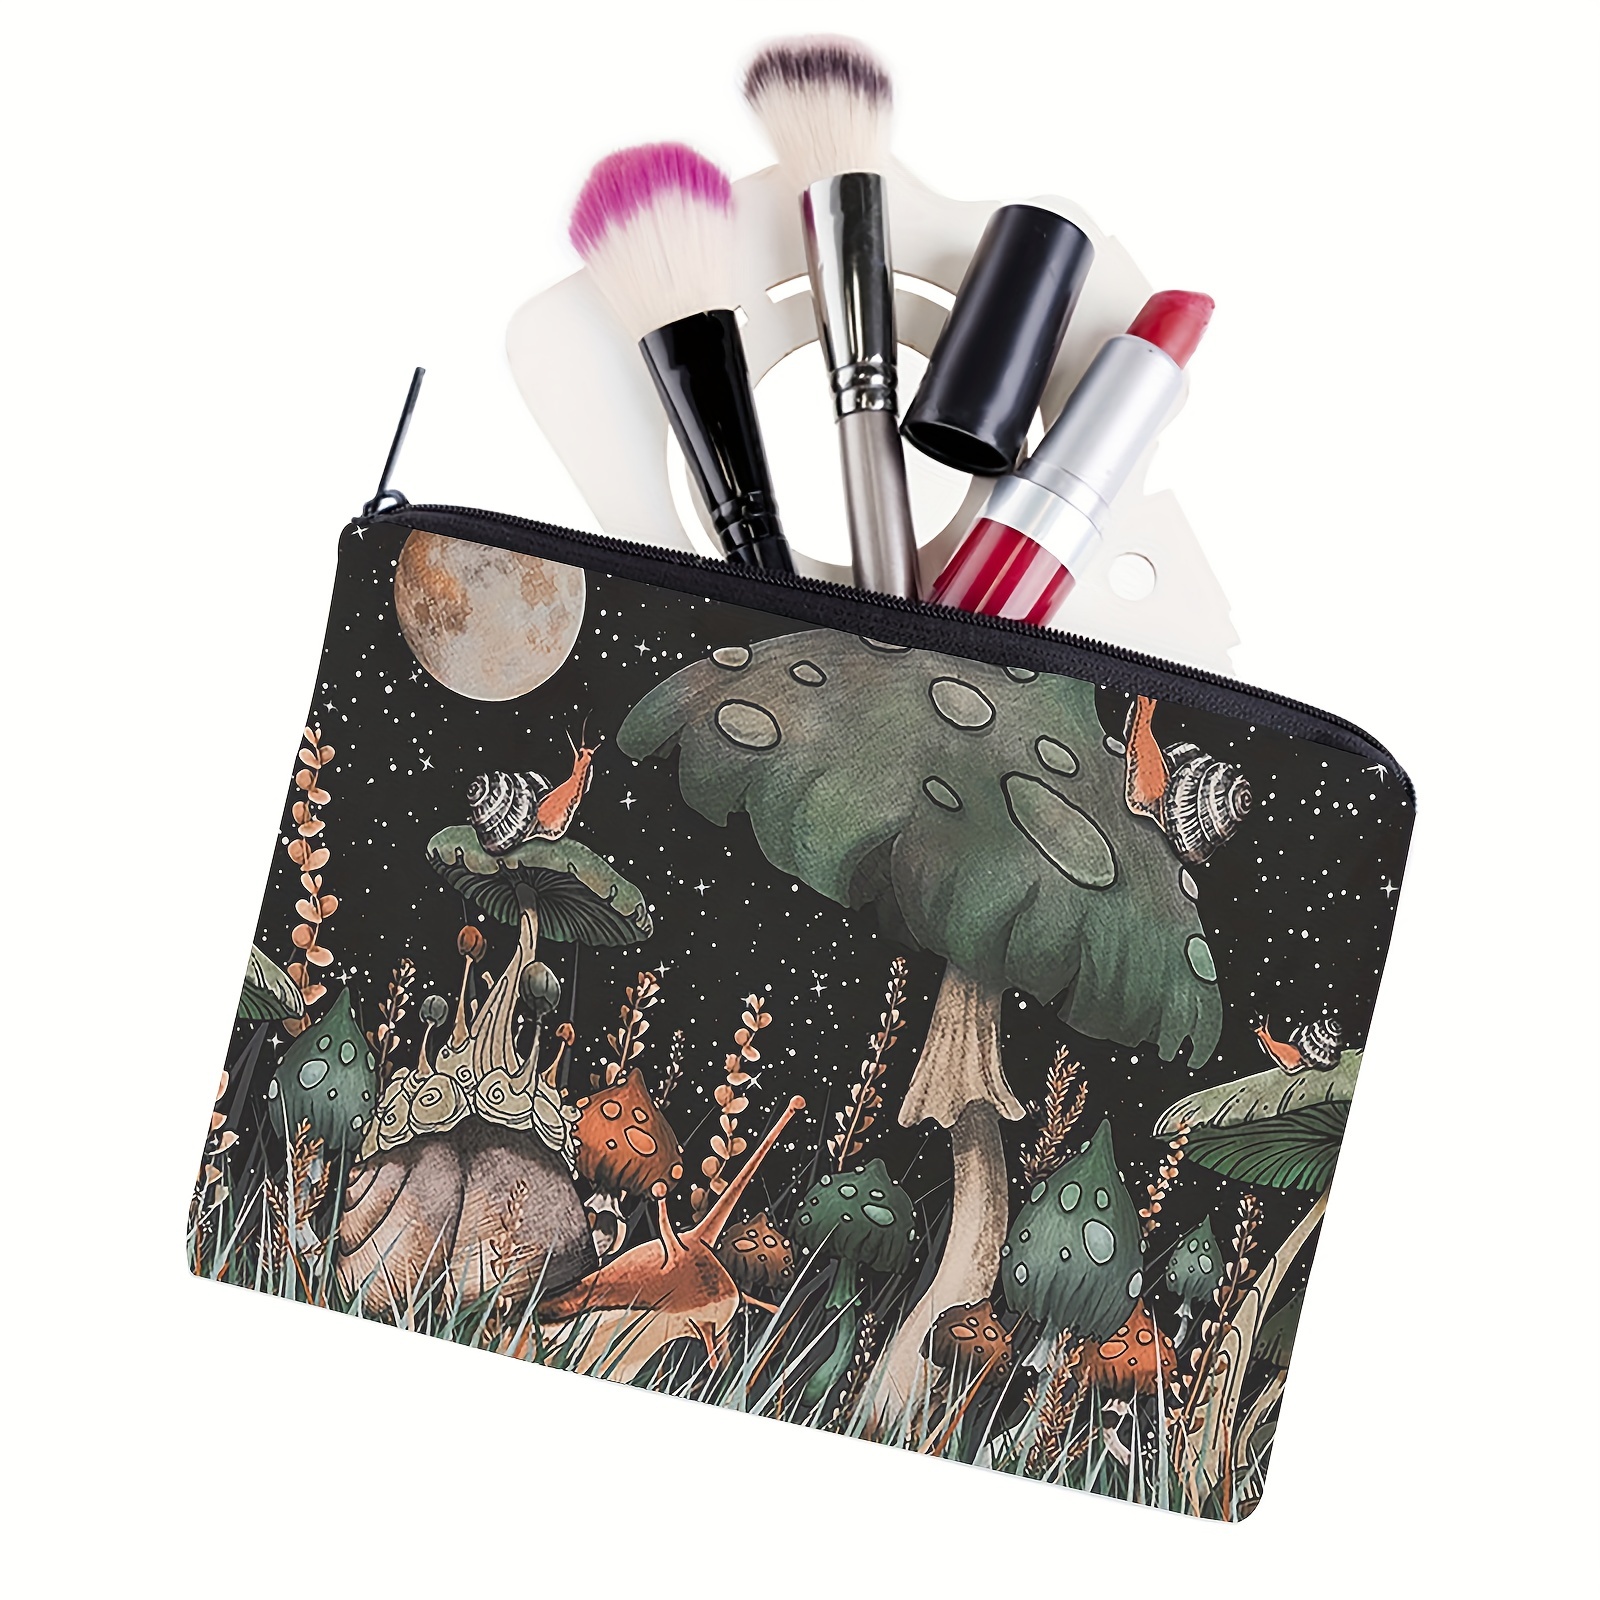 Small Cosmetic Bag,Portable Cute Travel Makeup Bag for Women and girls  Makeup Brush Organizer cosmetics